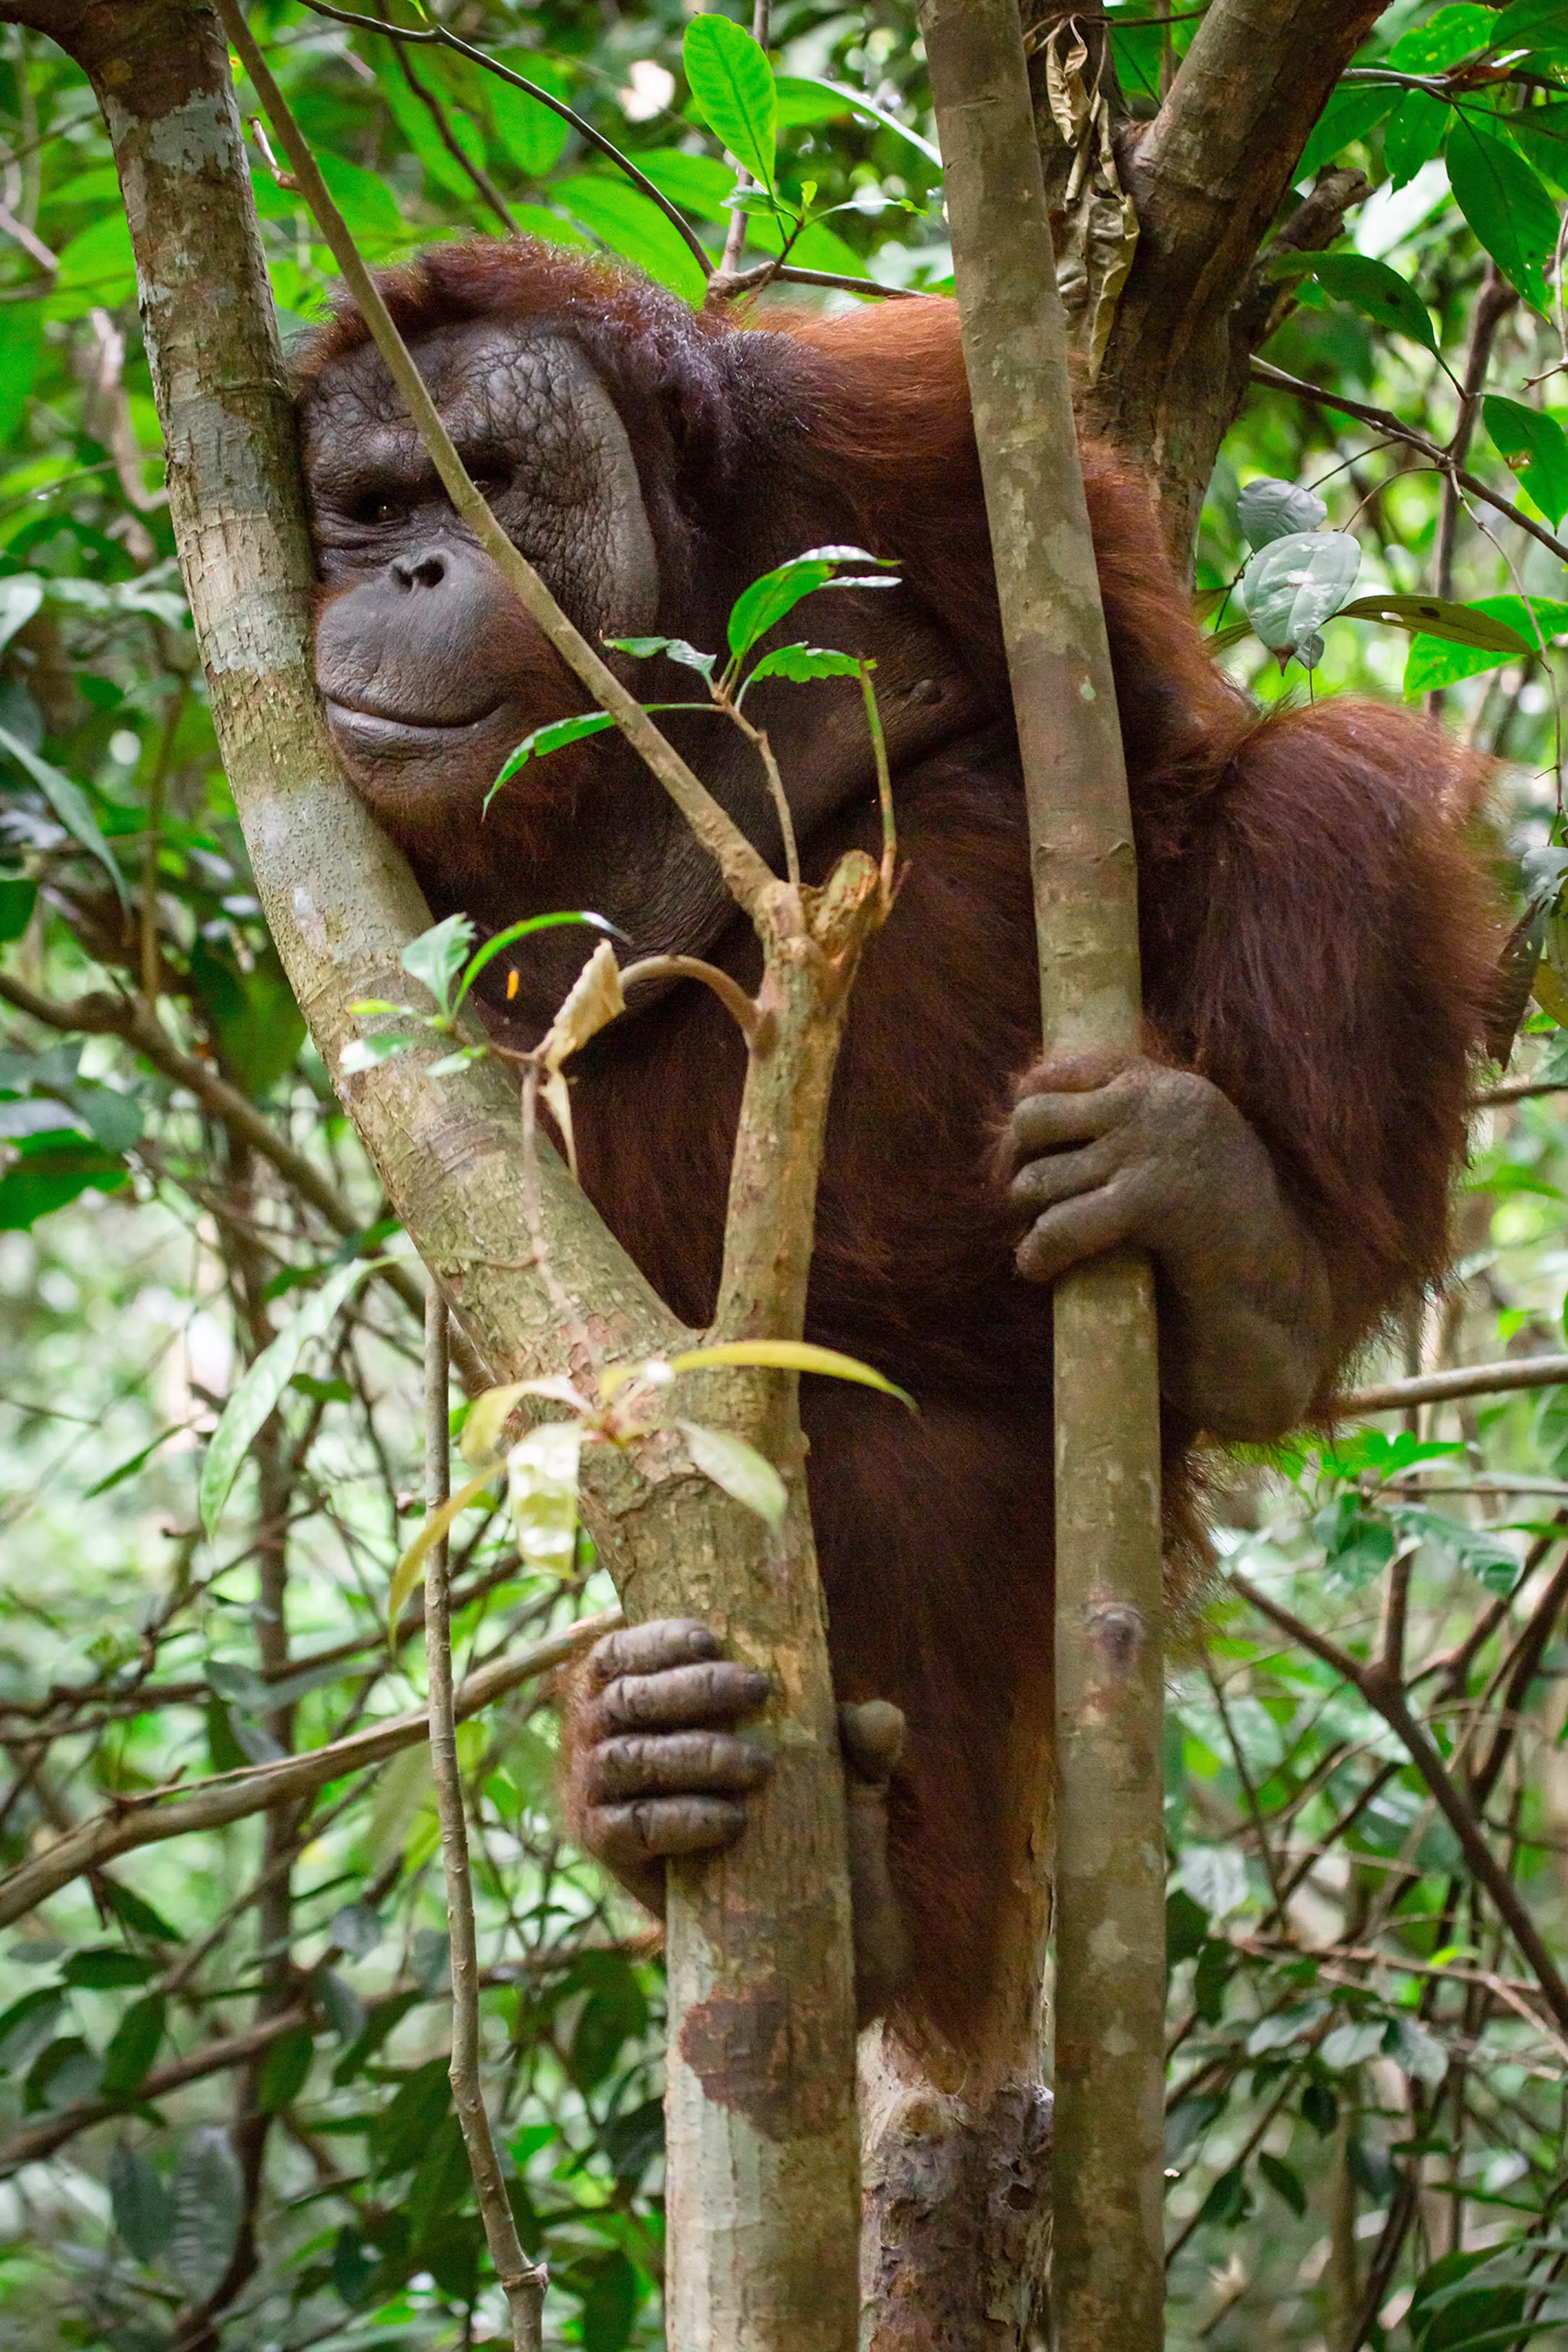 The orangutan has now completed rehabilitation (